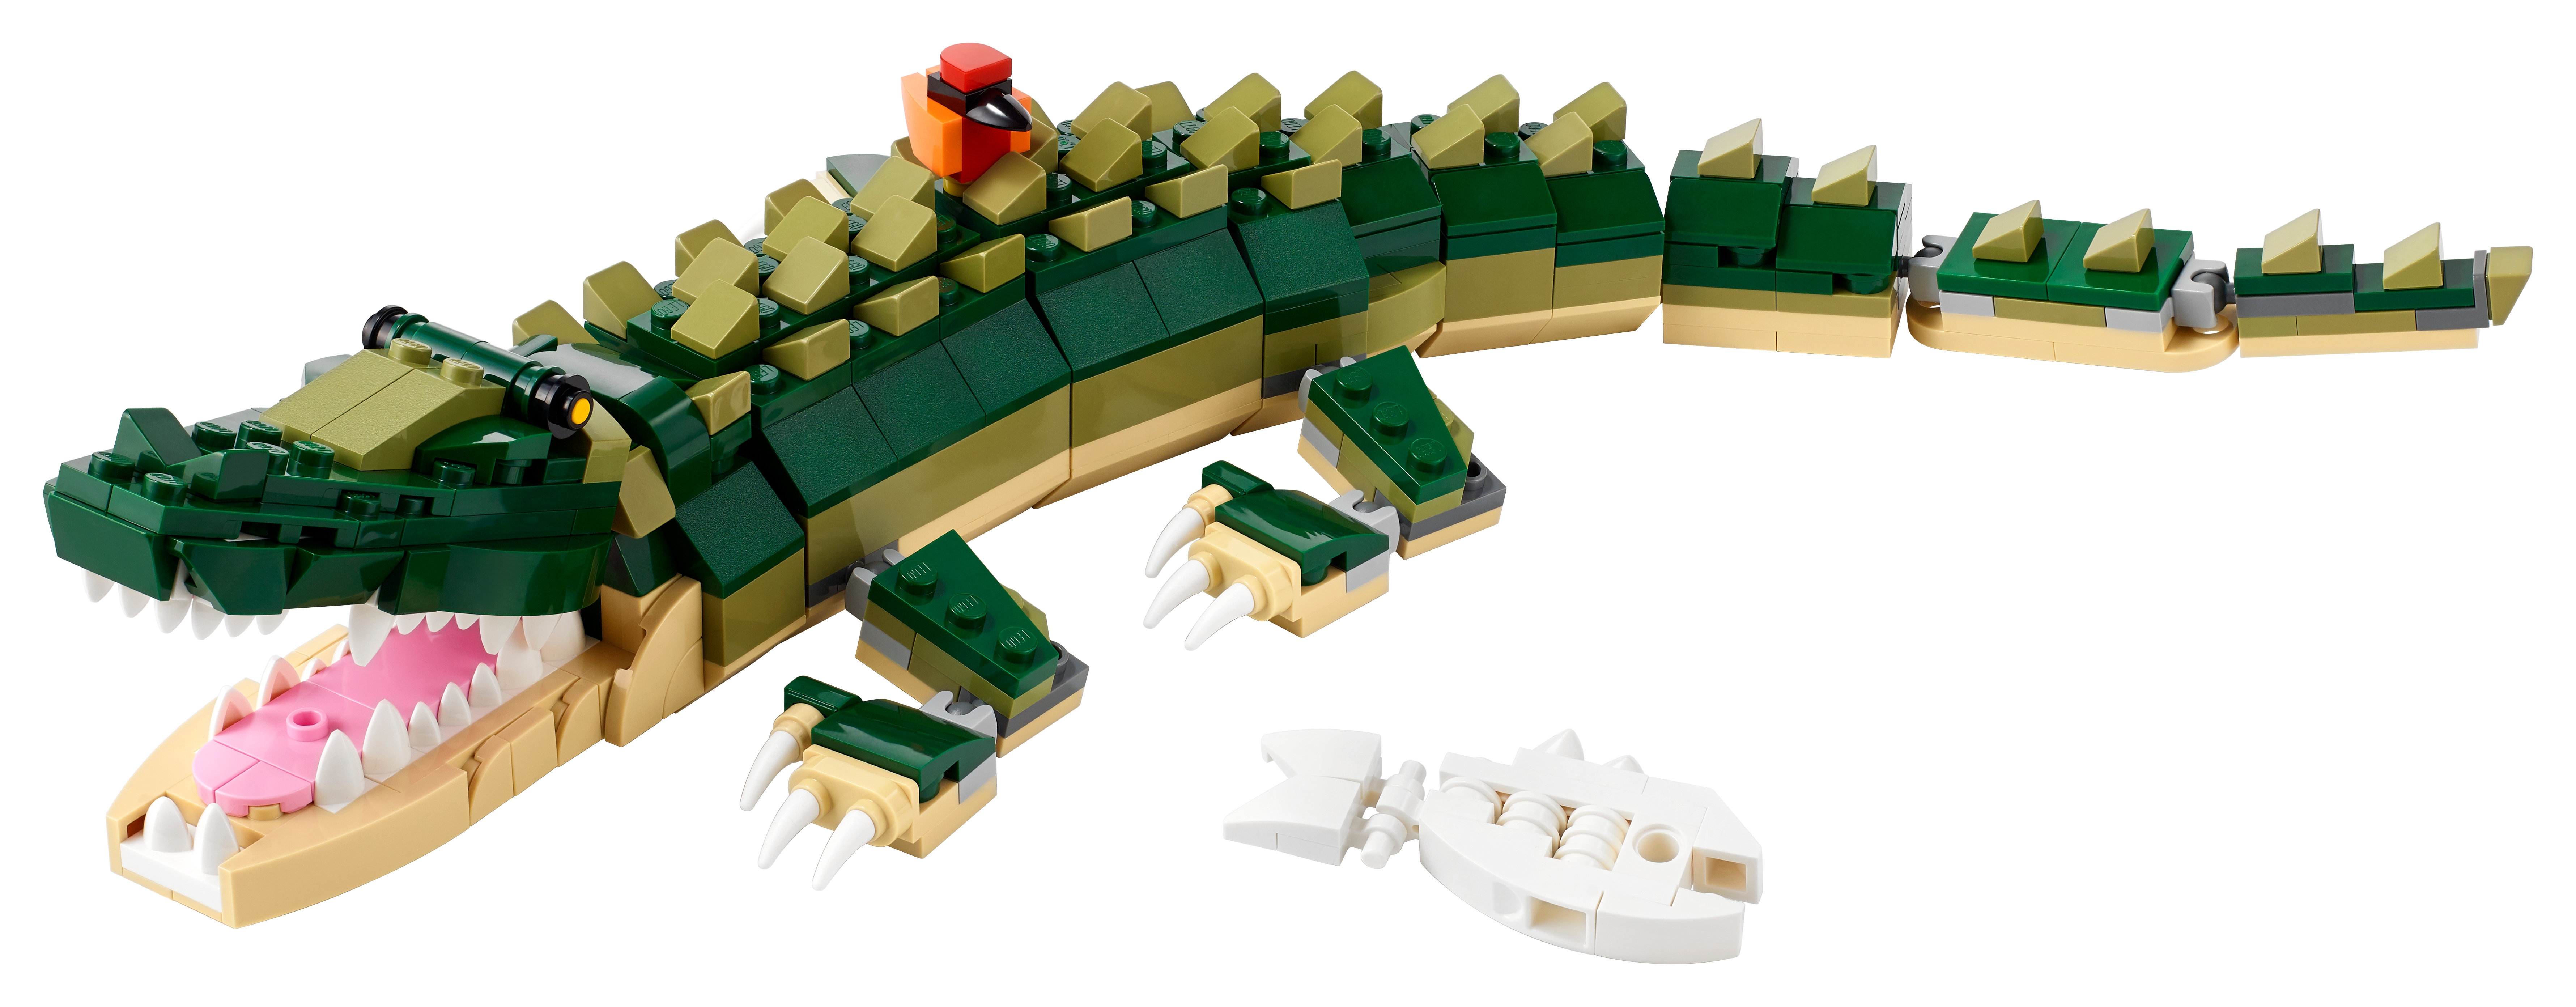 Crocodile 31121 Creator | Buy online at Official LEGO® Shop US